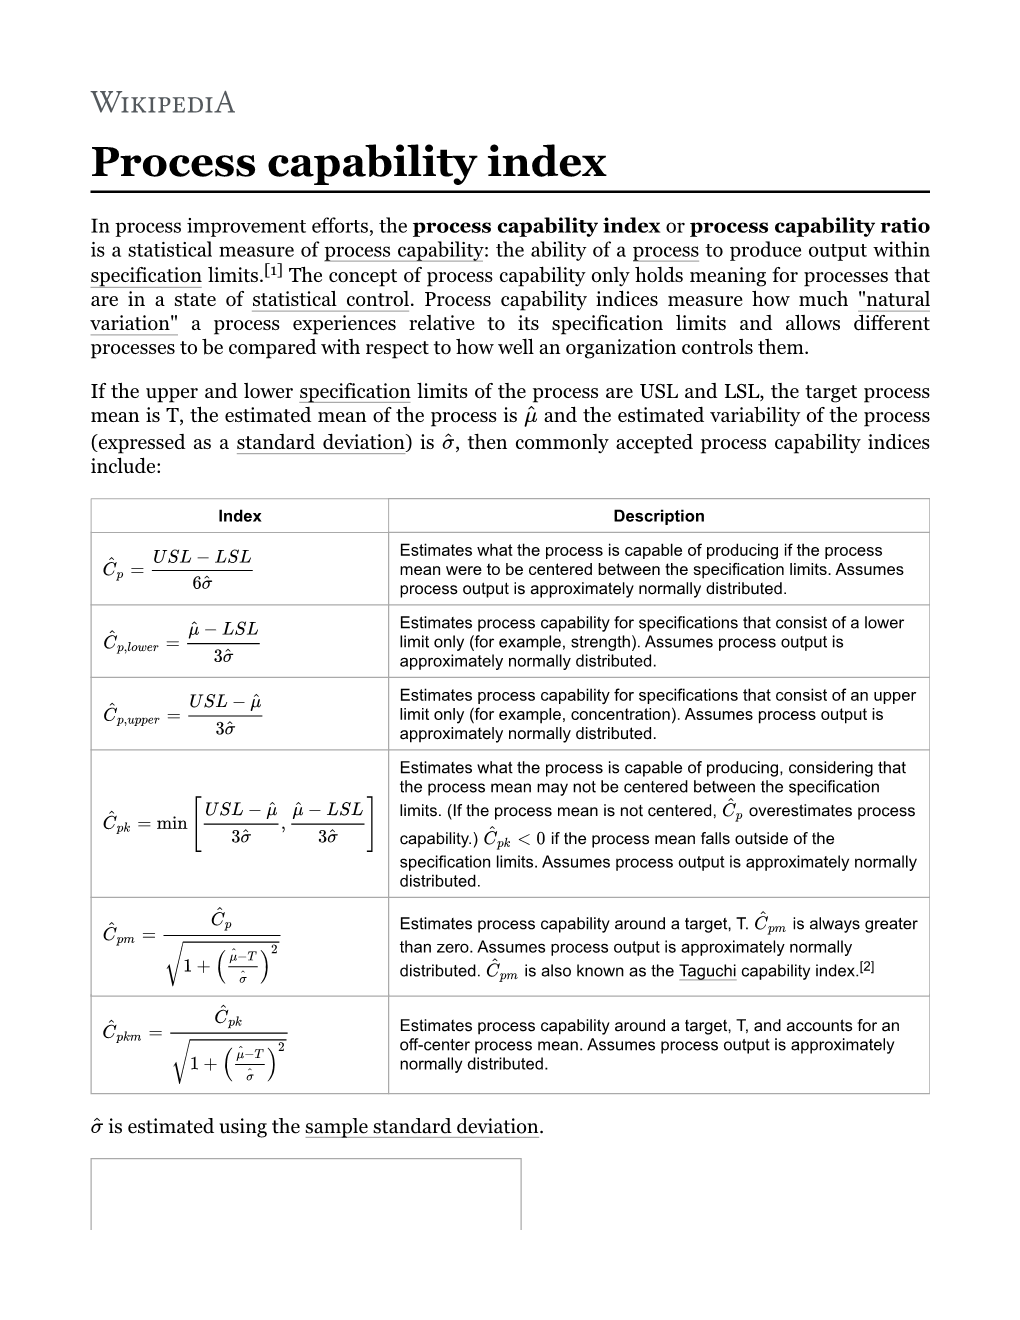 Process Capability Index